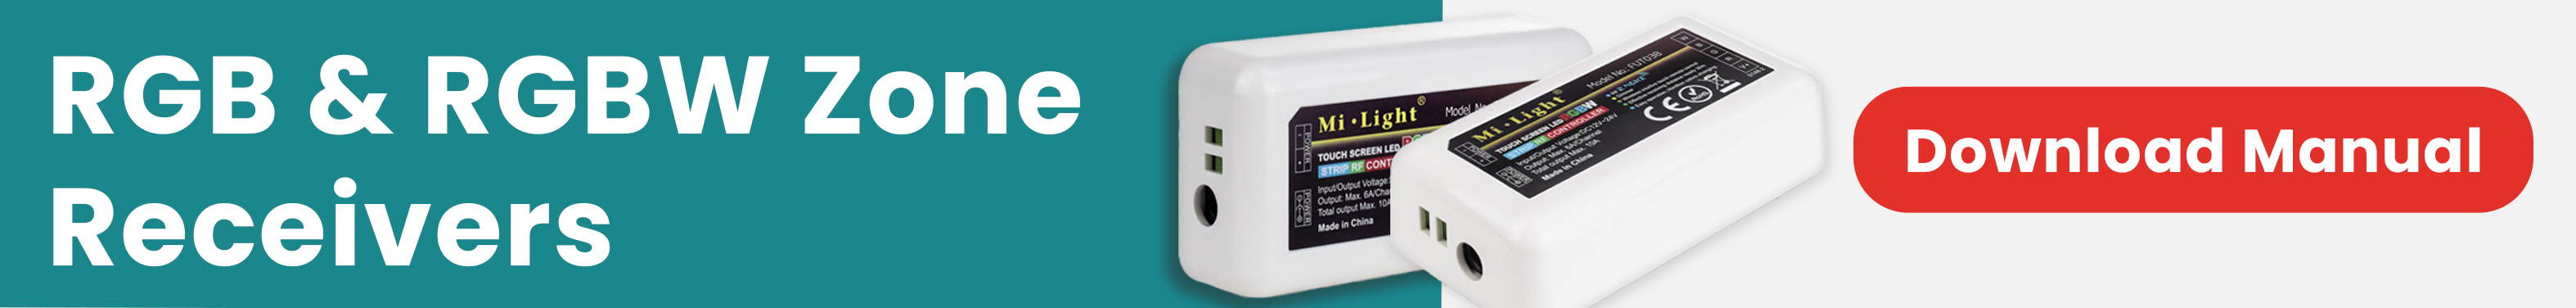 EasiLight RGB LED Zone Receiver Manual